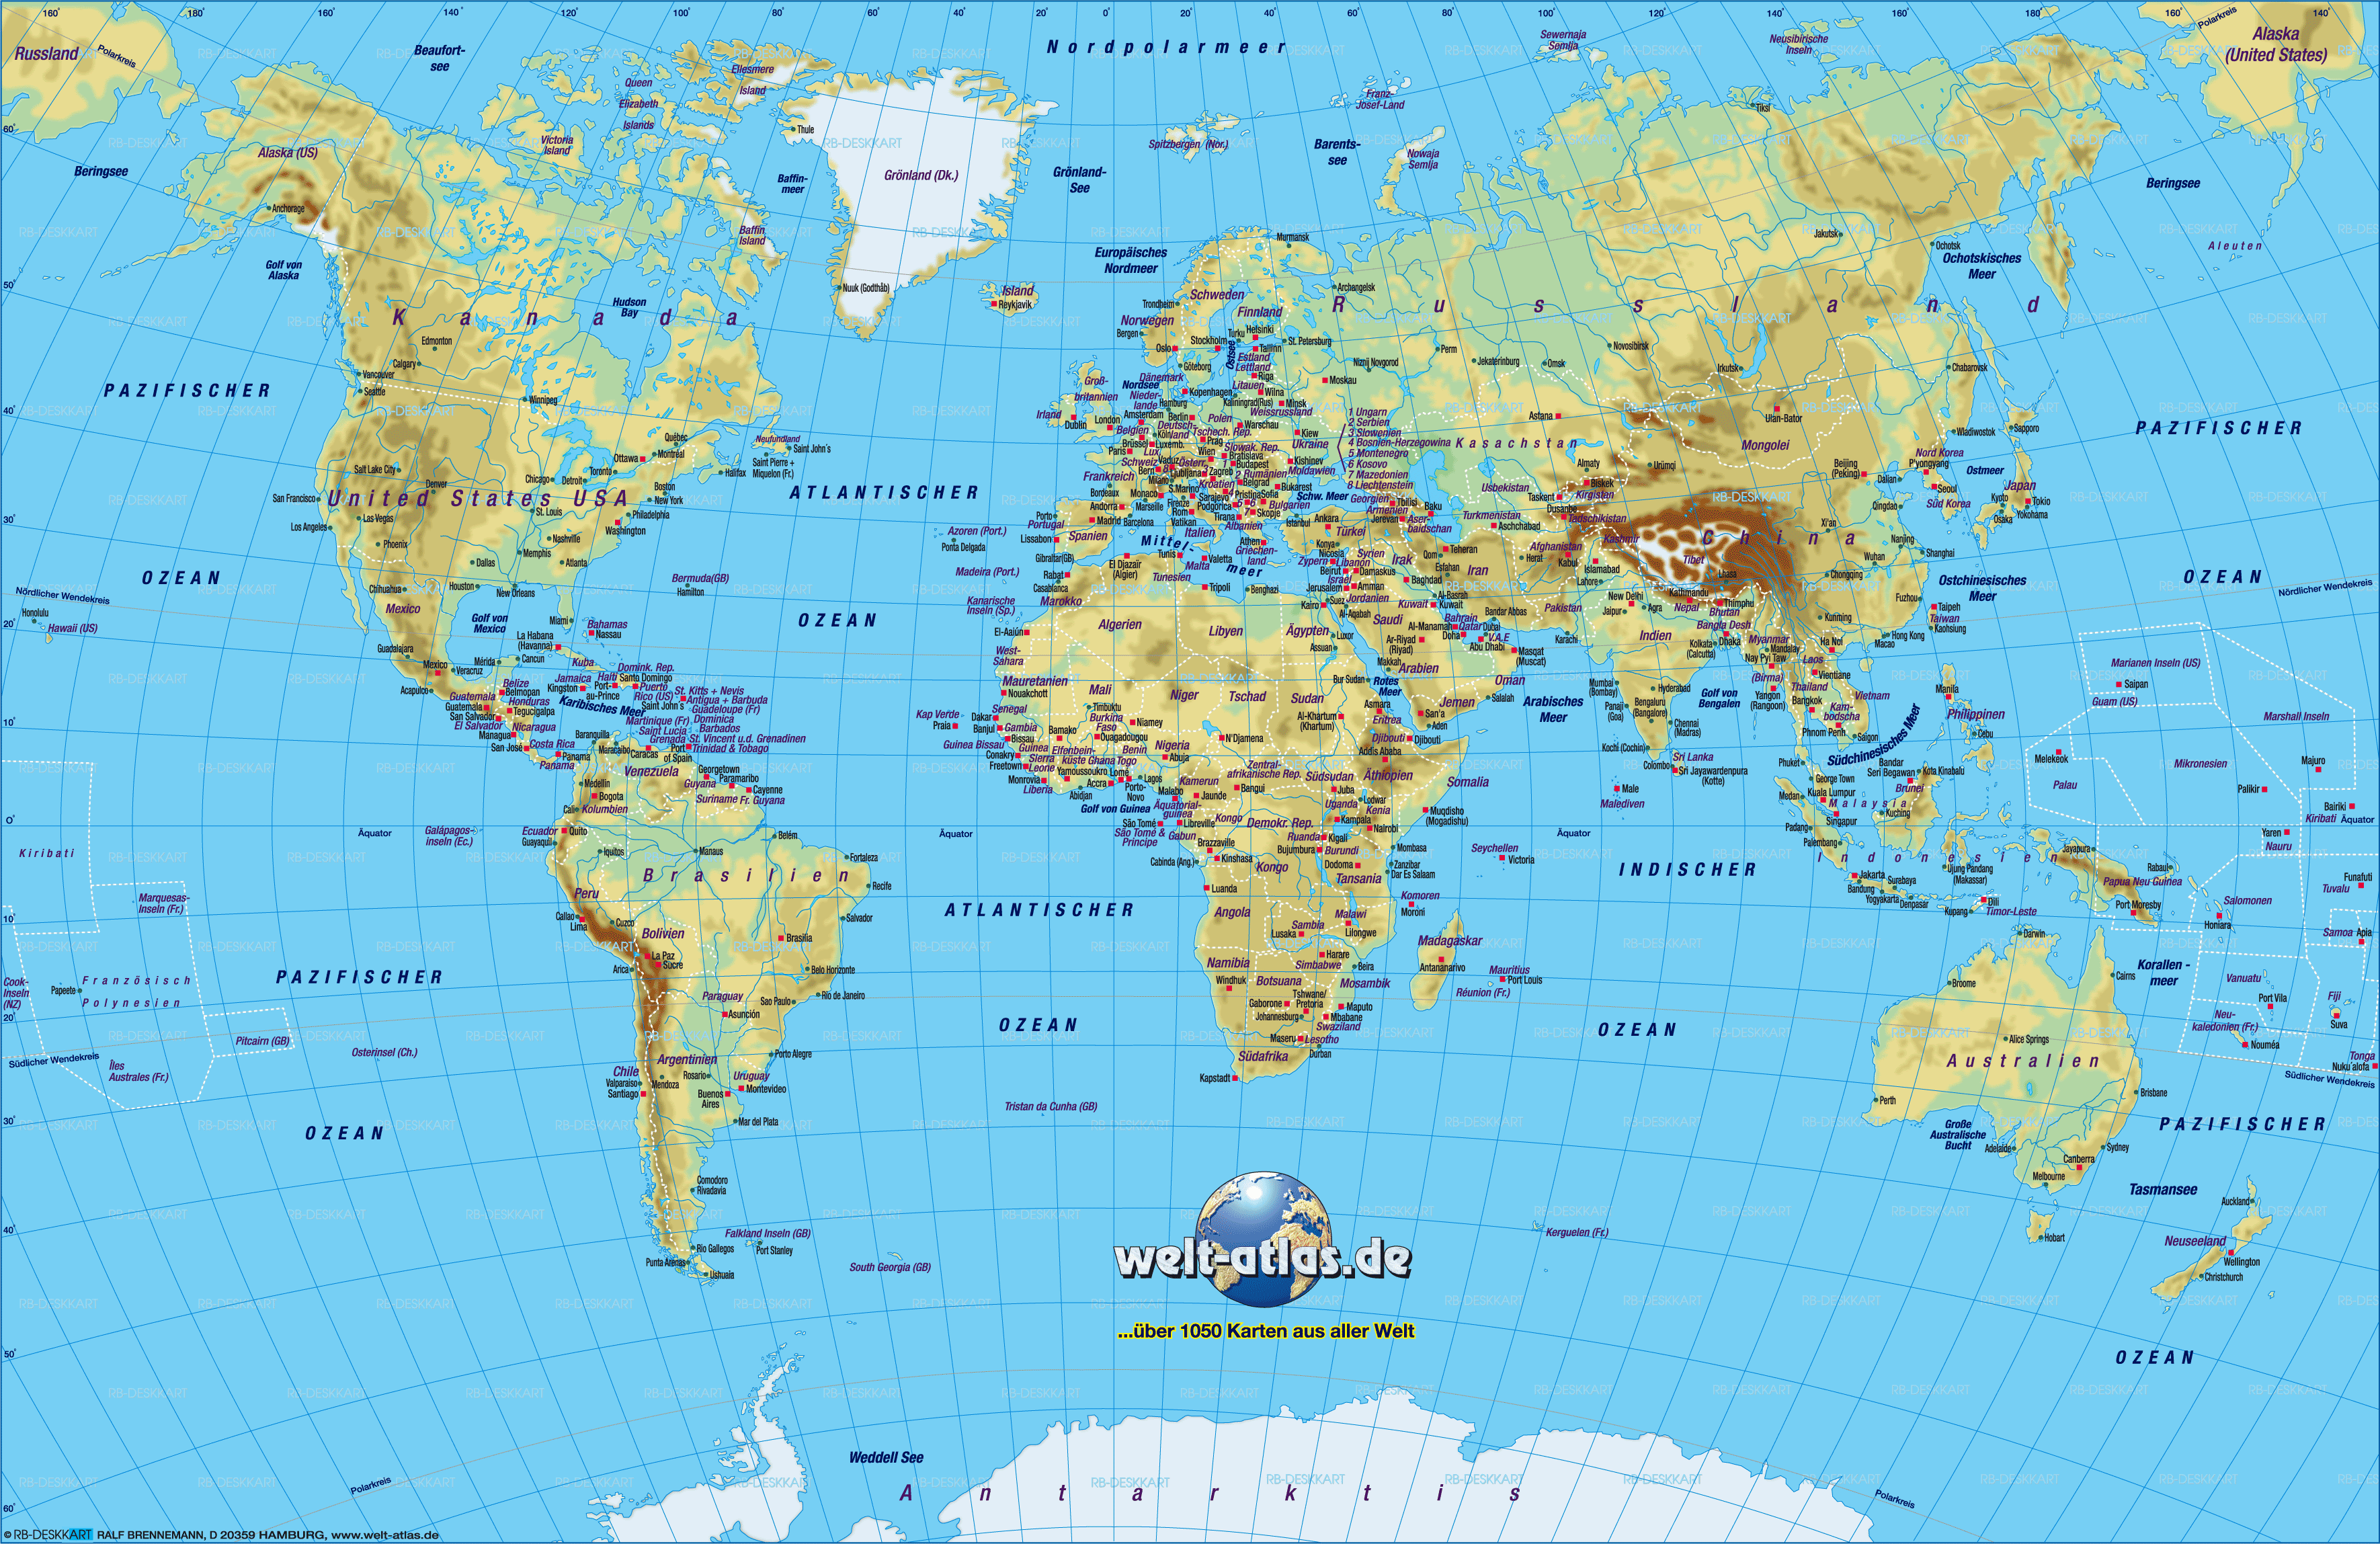 elgritosagrado11: 25 Luxury The World Map